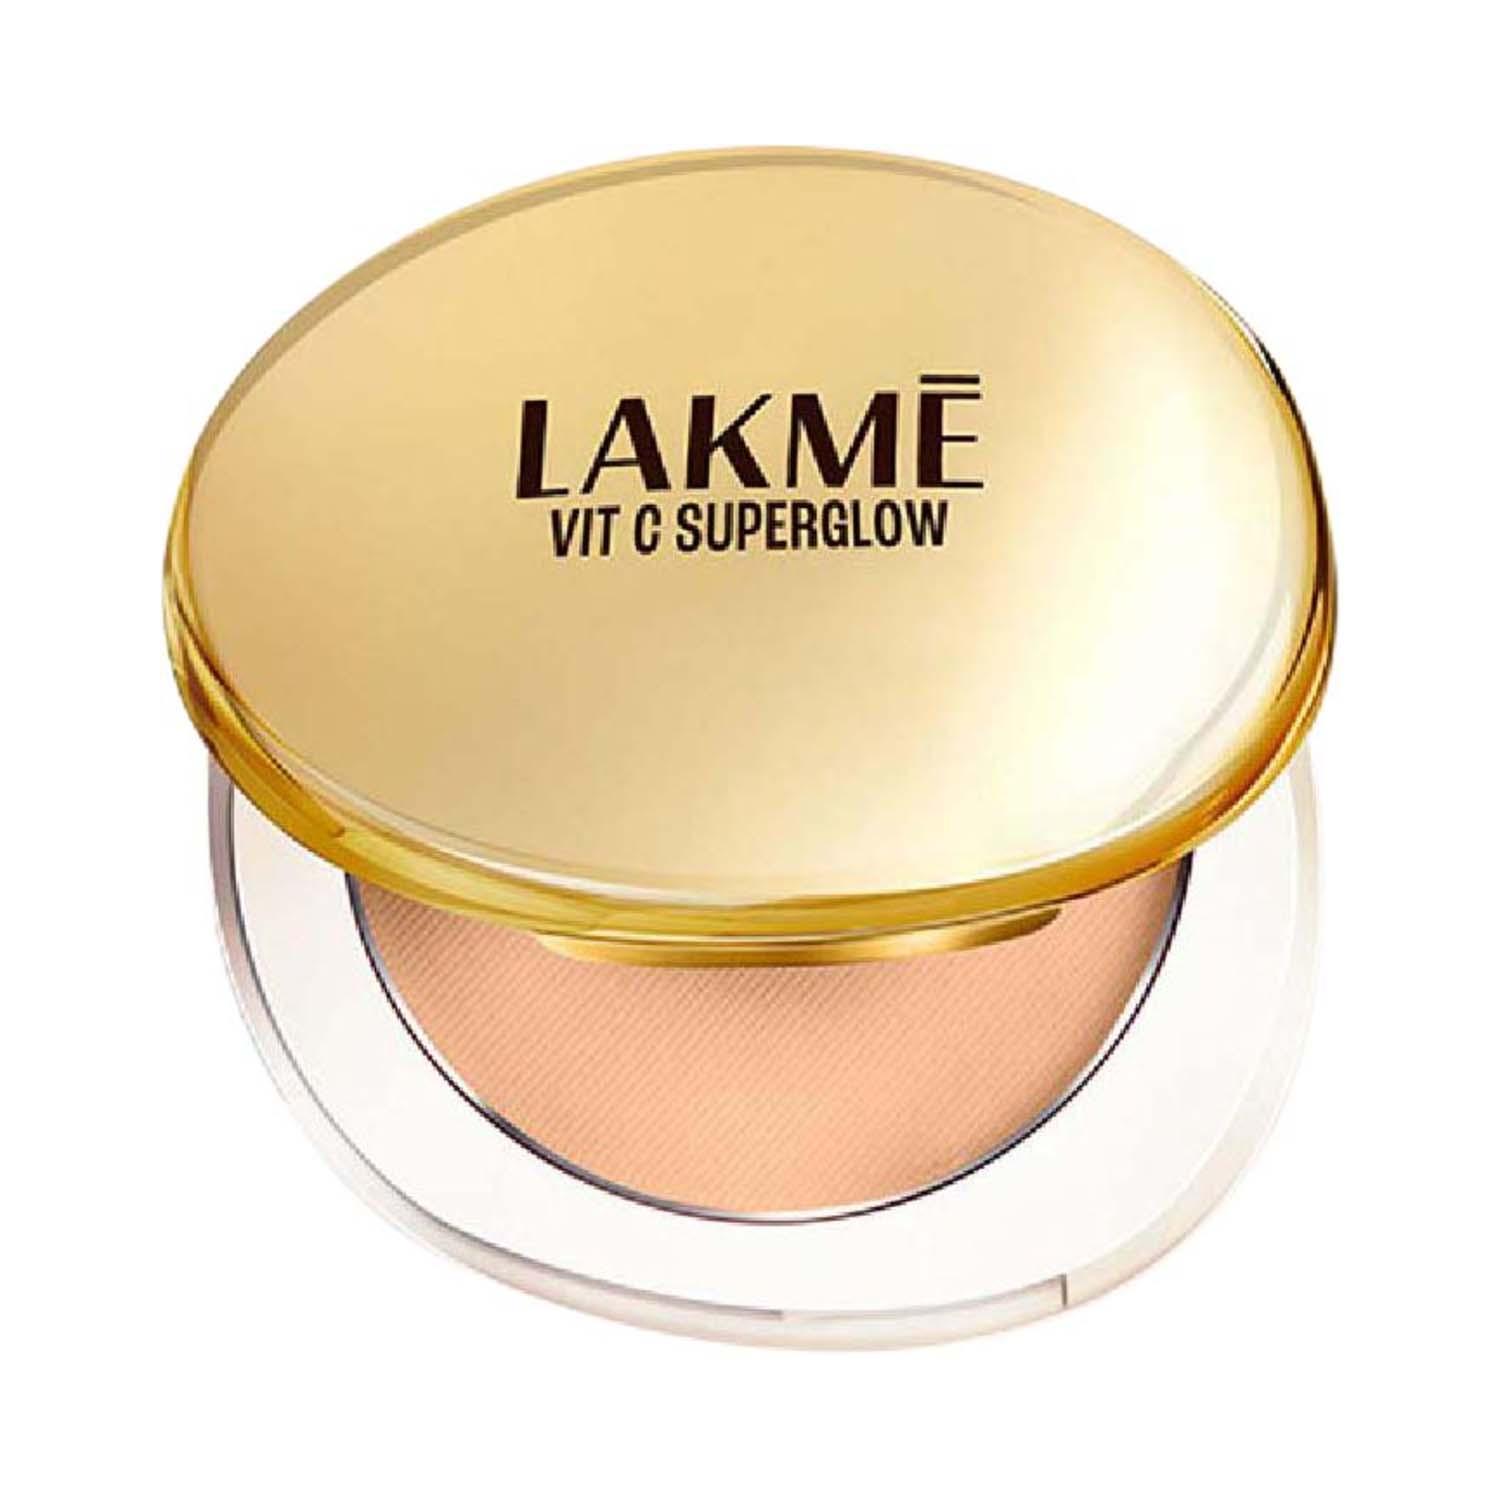 Lakme | Lakme Makeup+Skincare Vit C Superglow Skin Perfecting Compact - Nude 20 (8 g)